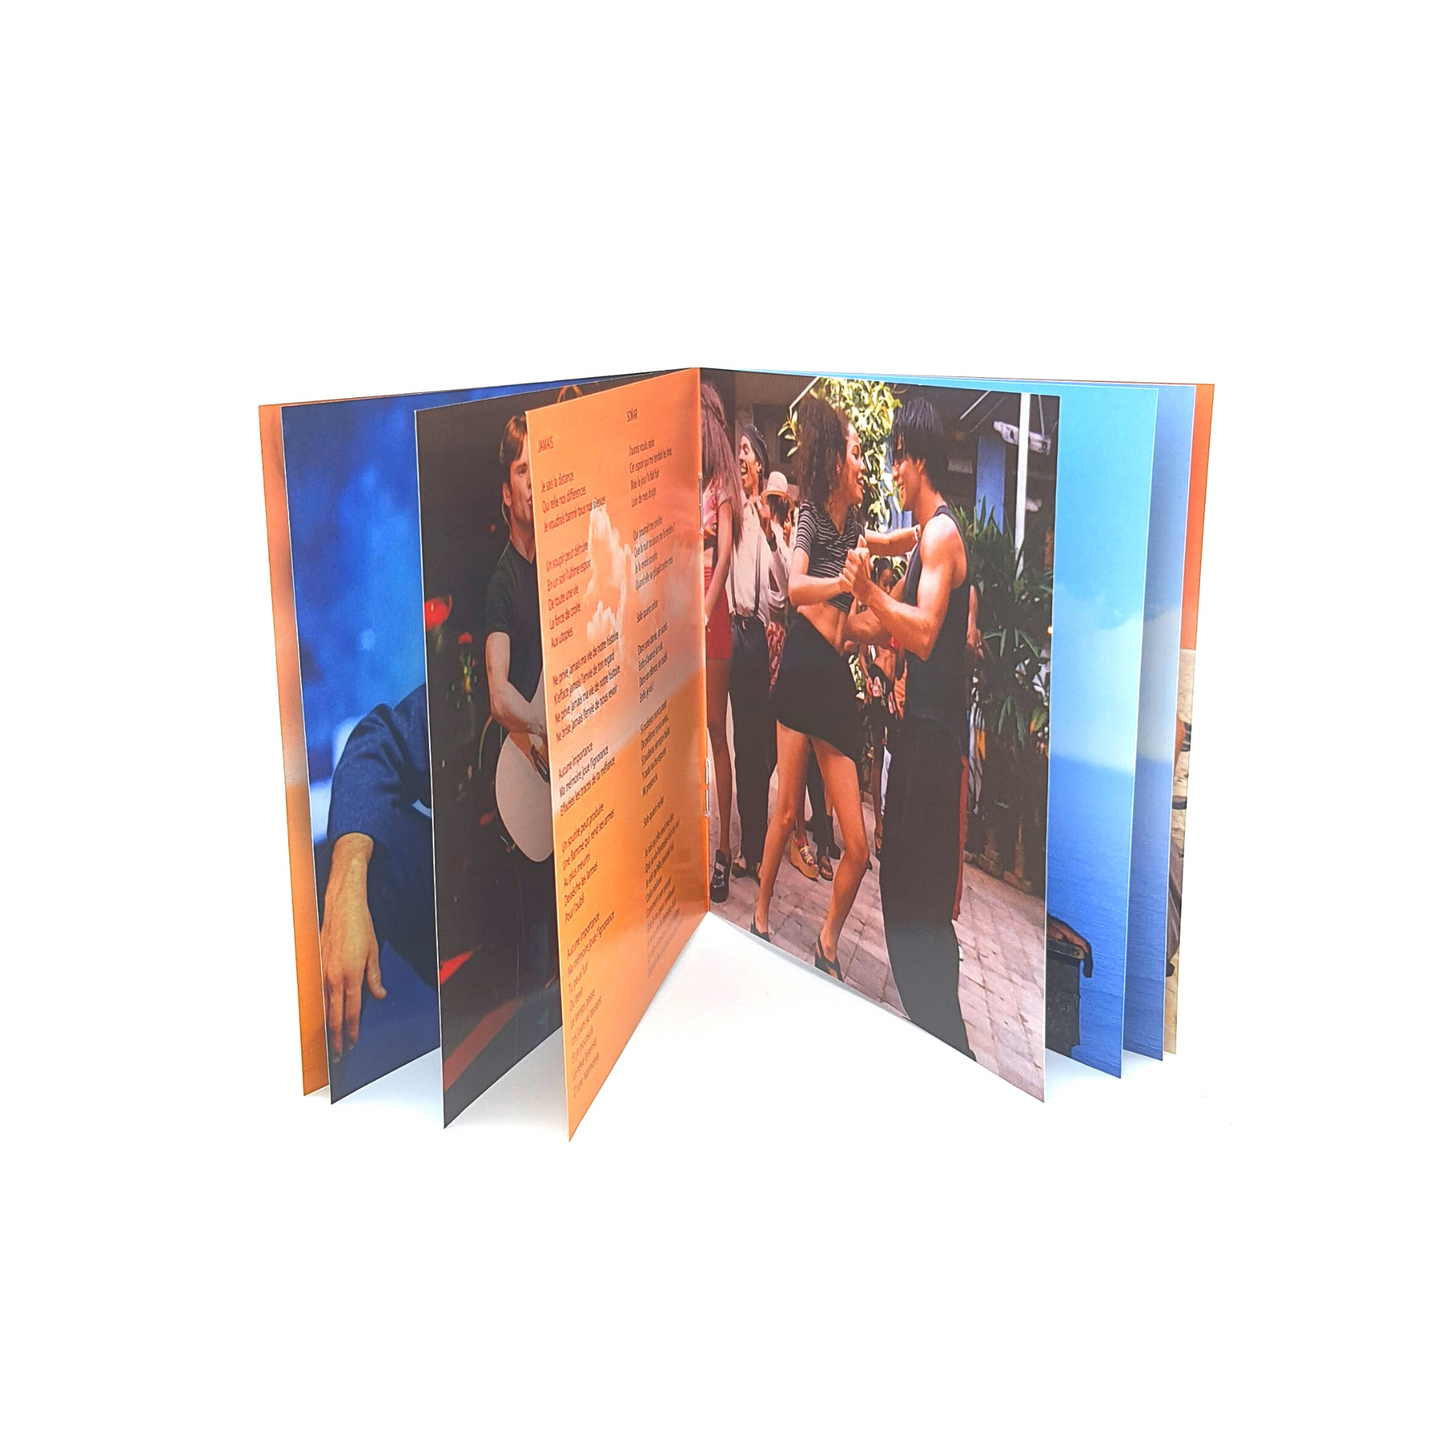 Coffret EMMENE-MOI Deluxe Edition (Digipack Deluxe 3 volets + Livret 16 pages)